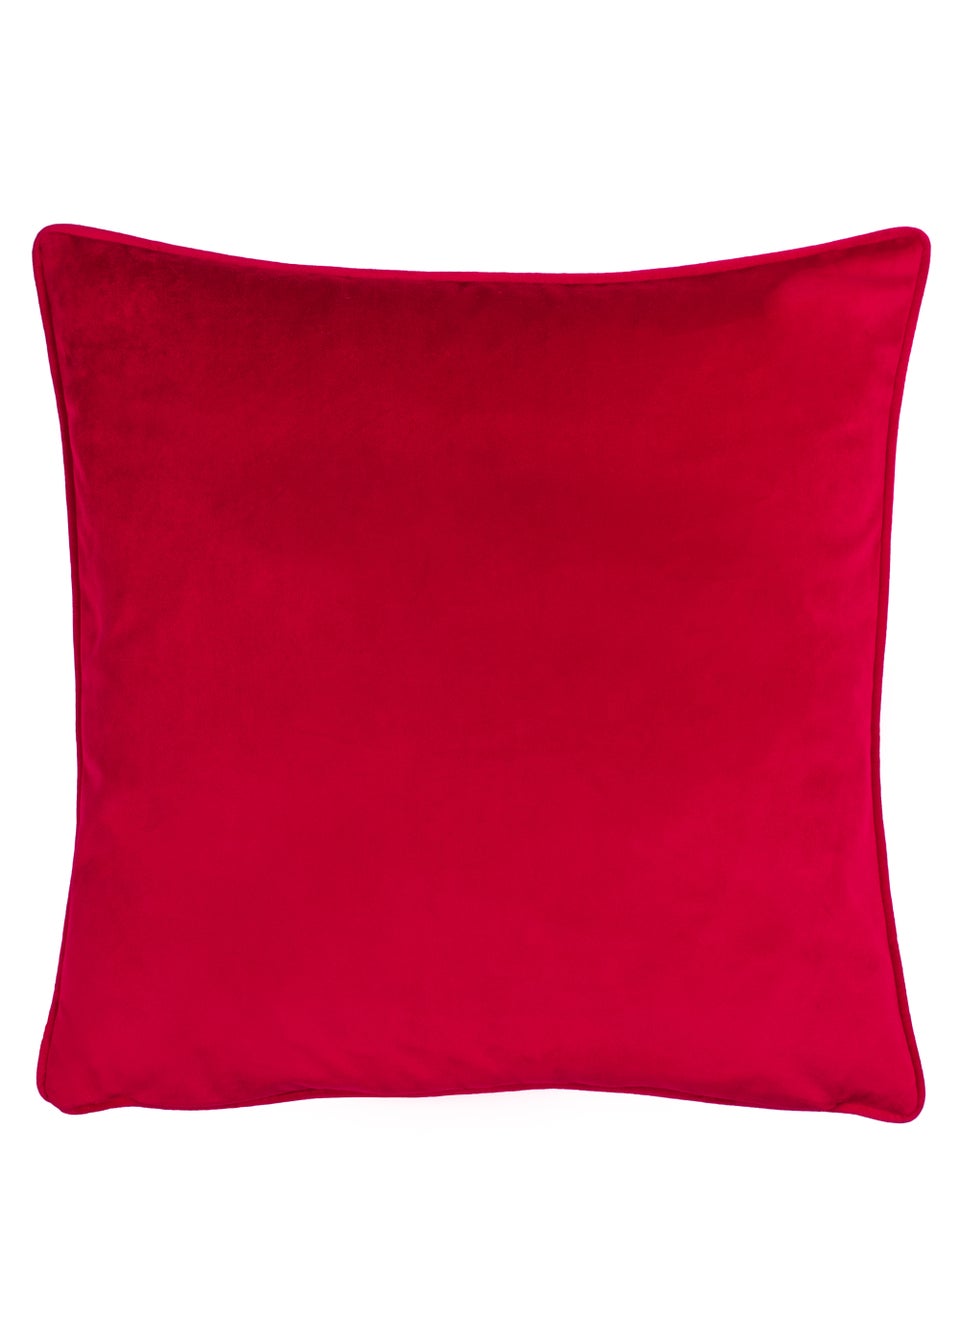 furn. Purrfect Fabyuleous Festive Filled Cushion (43cm x 43cm x 8cm)